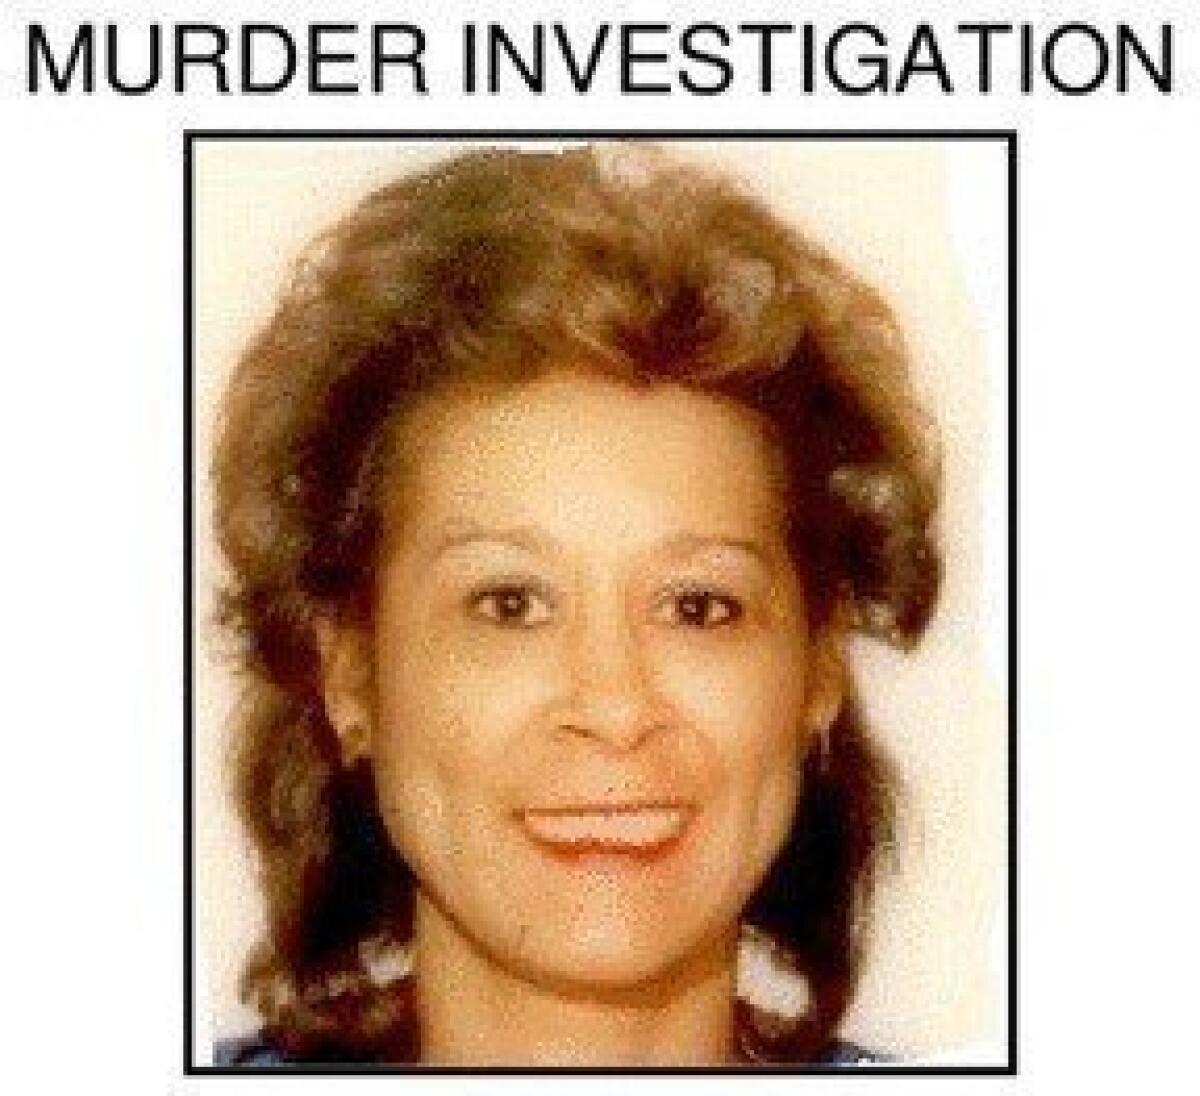 2010 flier seeking information about Aleta Browne's 1988 homicide.